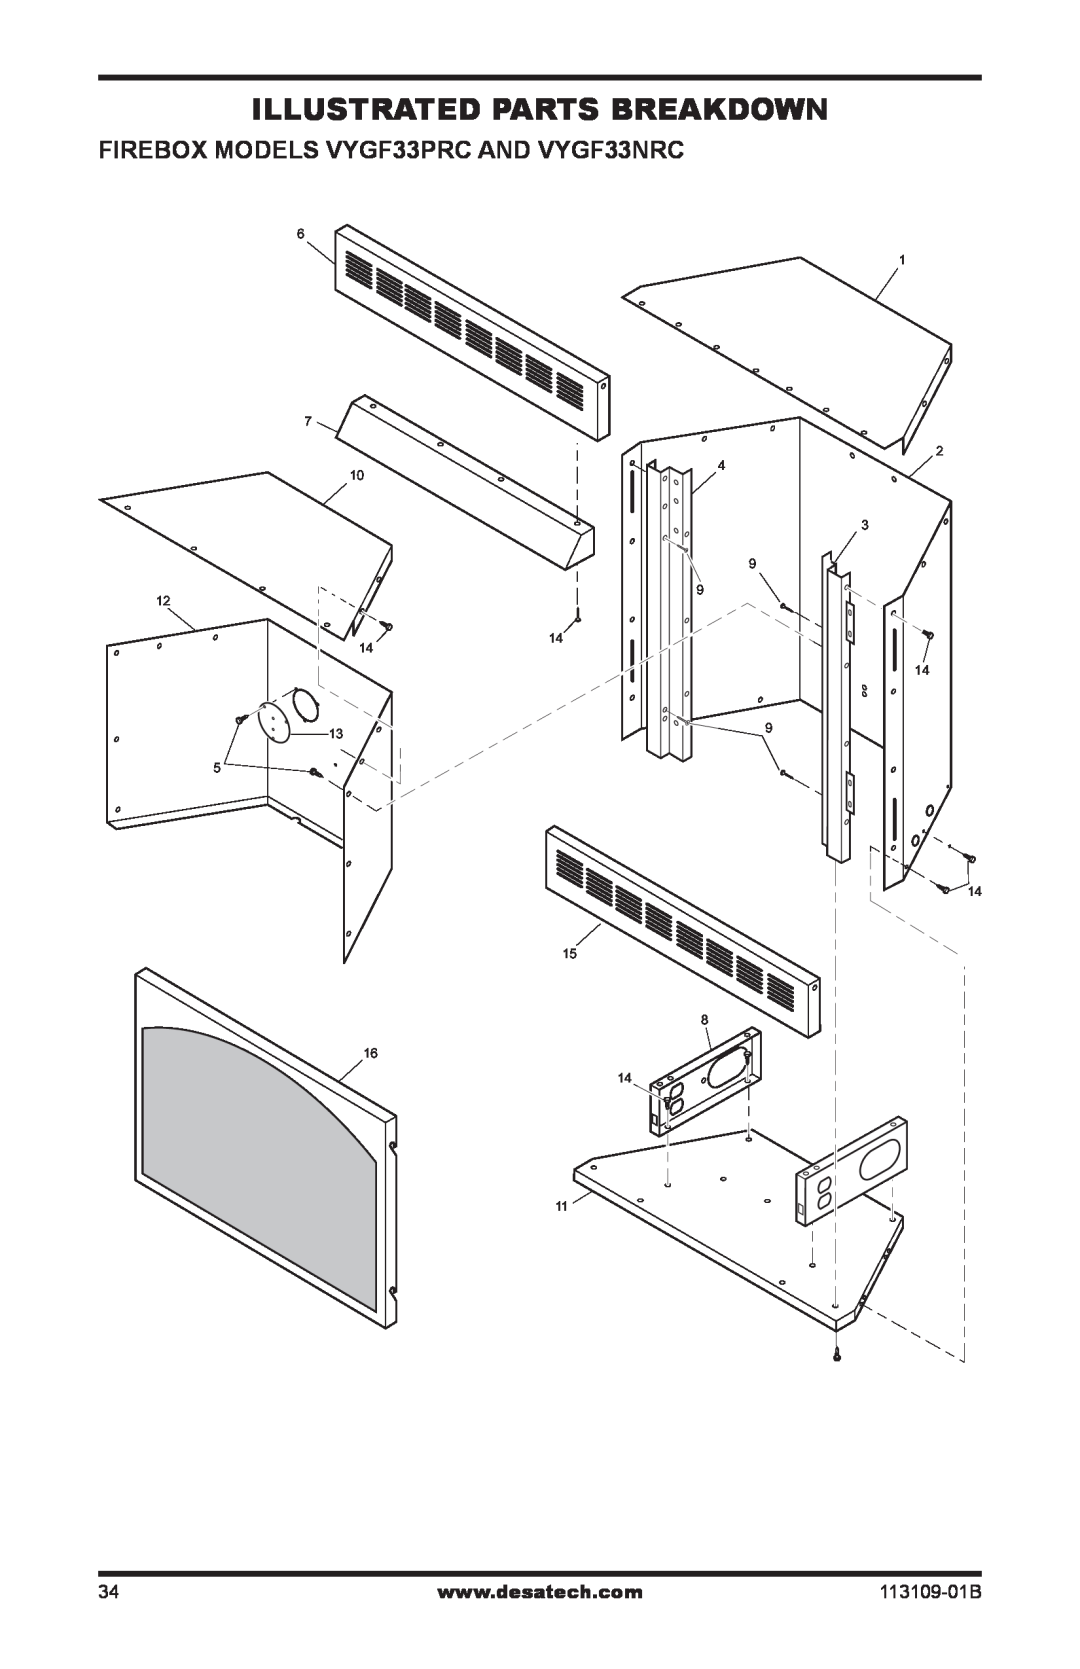 Desa installation manual Illustrated Parts Breakdown, FIREBOX MODELS VYGF33PRC AND VYGF33NRC, 113109-01B 